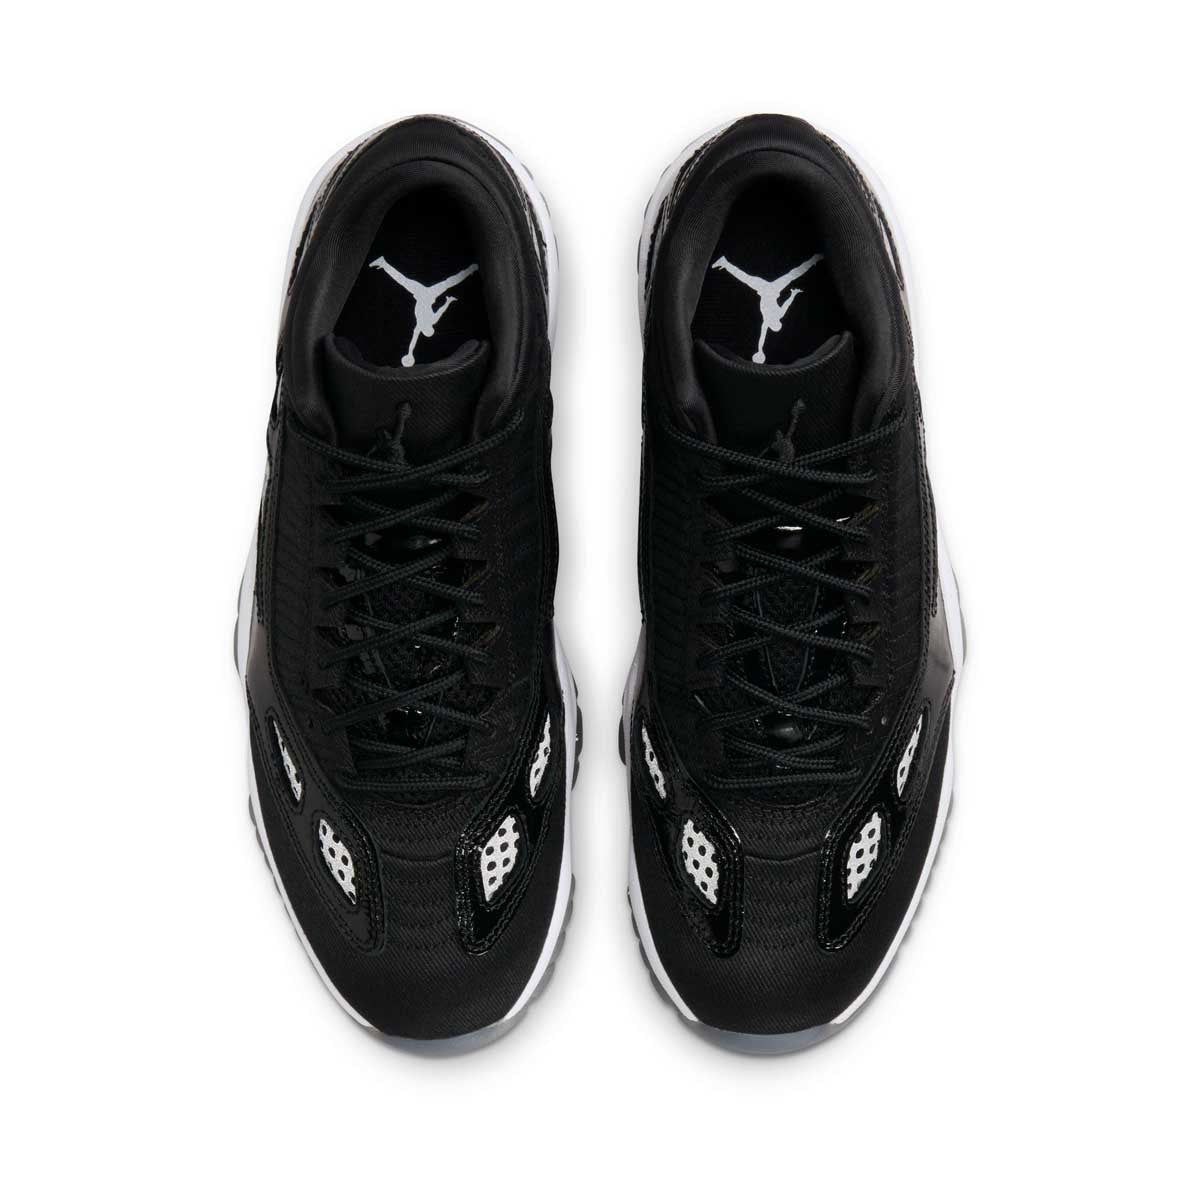 A Closer Look at the Air Jordan 2 Low Craft Men's Shoes